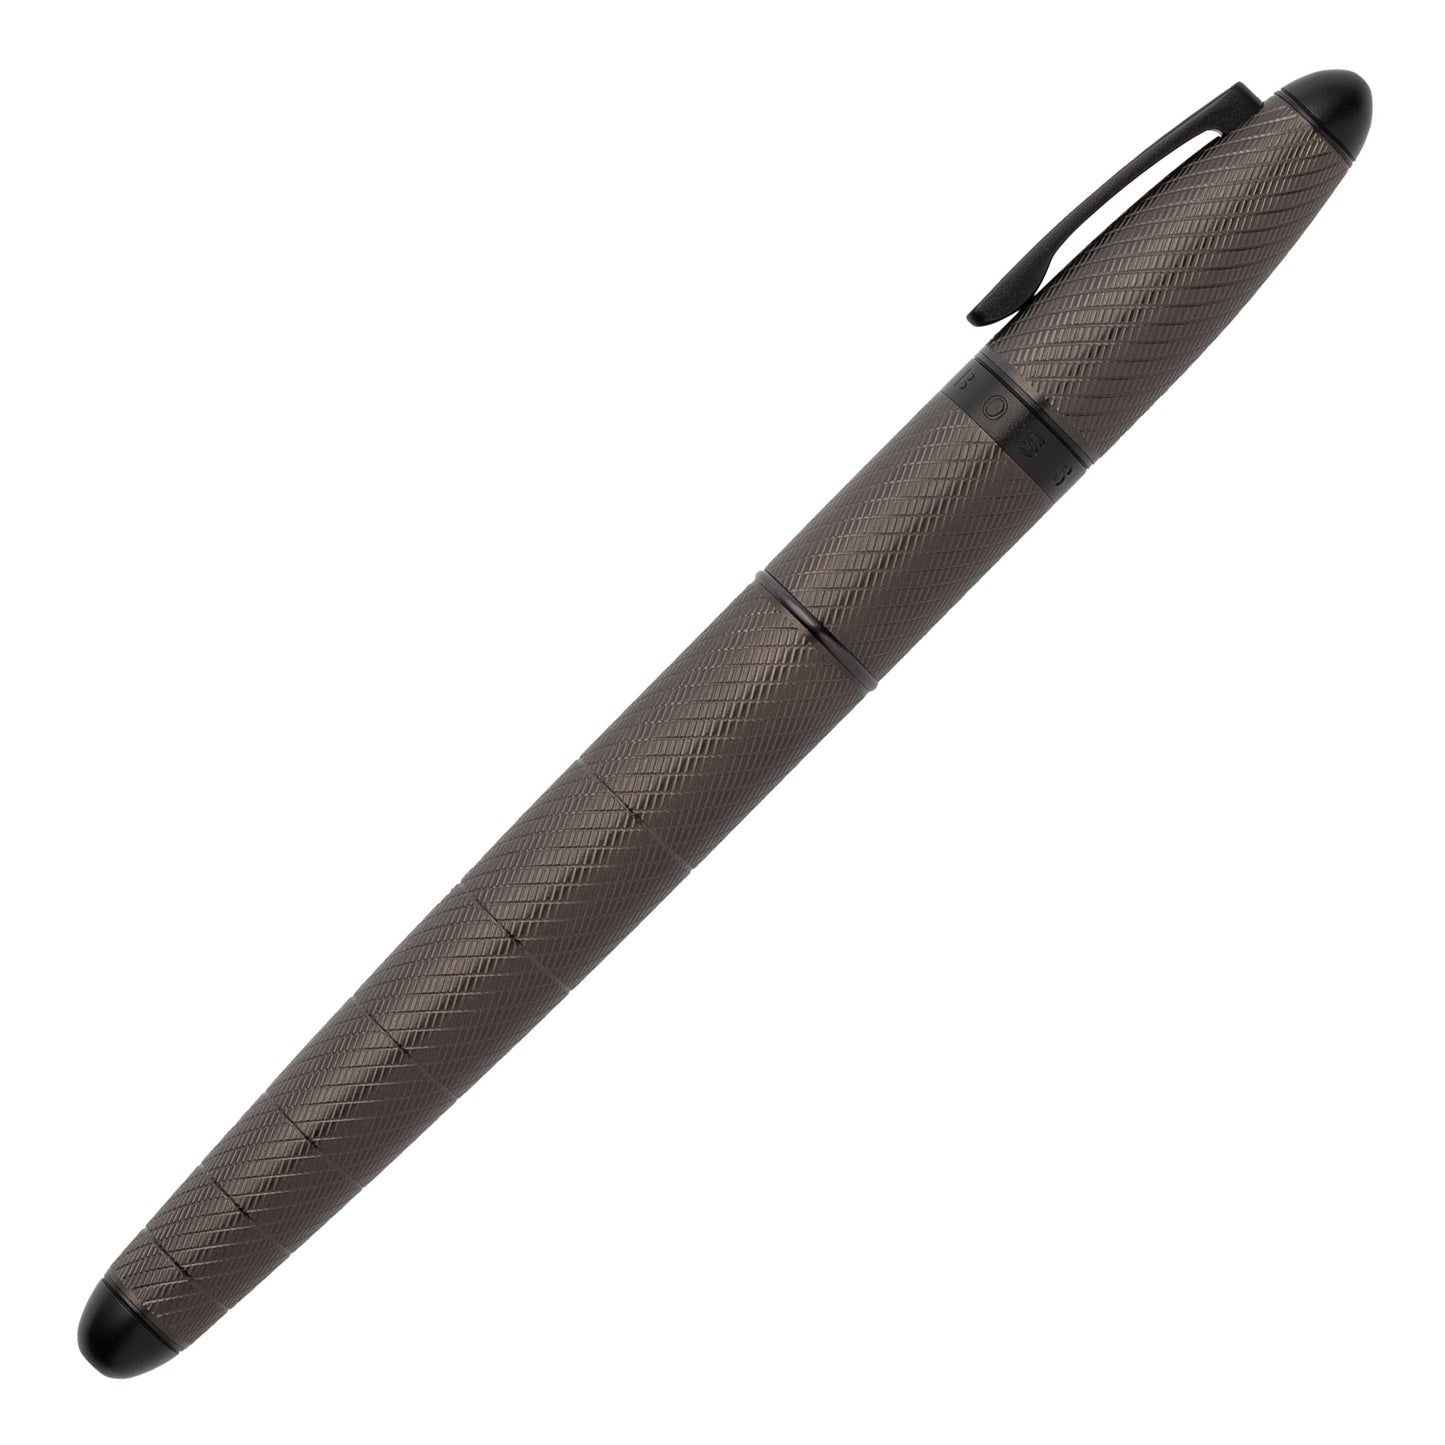 Hugo Boss - Fountain Pen Oval Gun - Product Code: HSF1562D